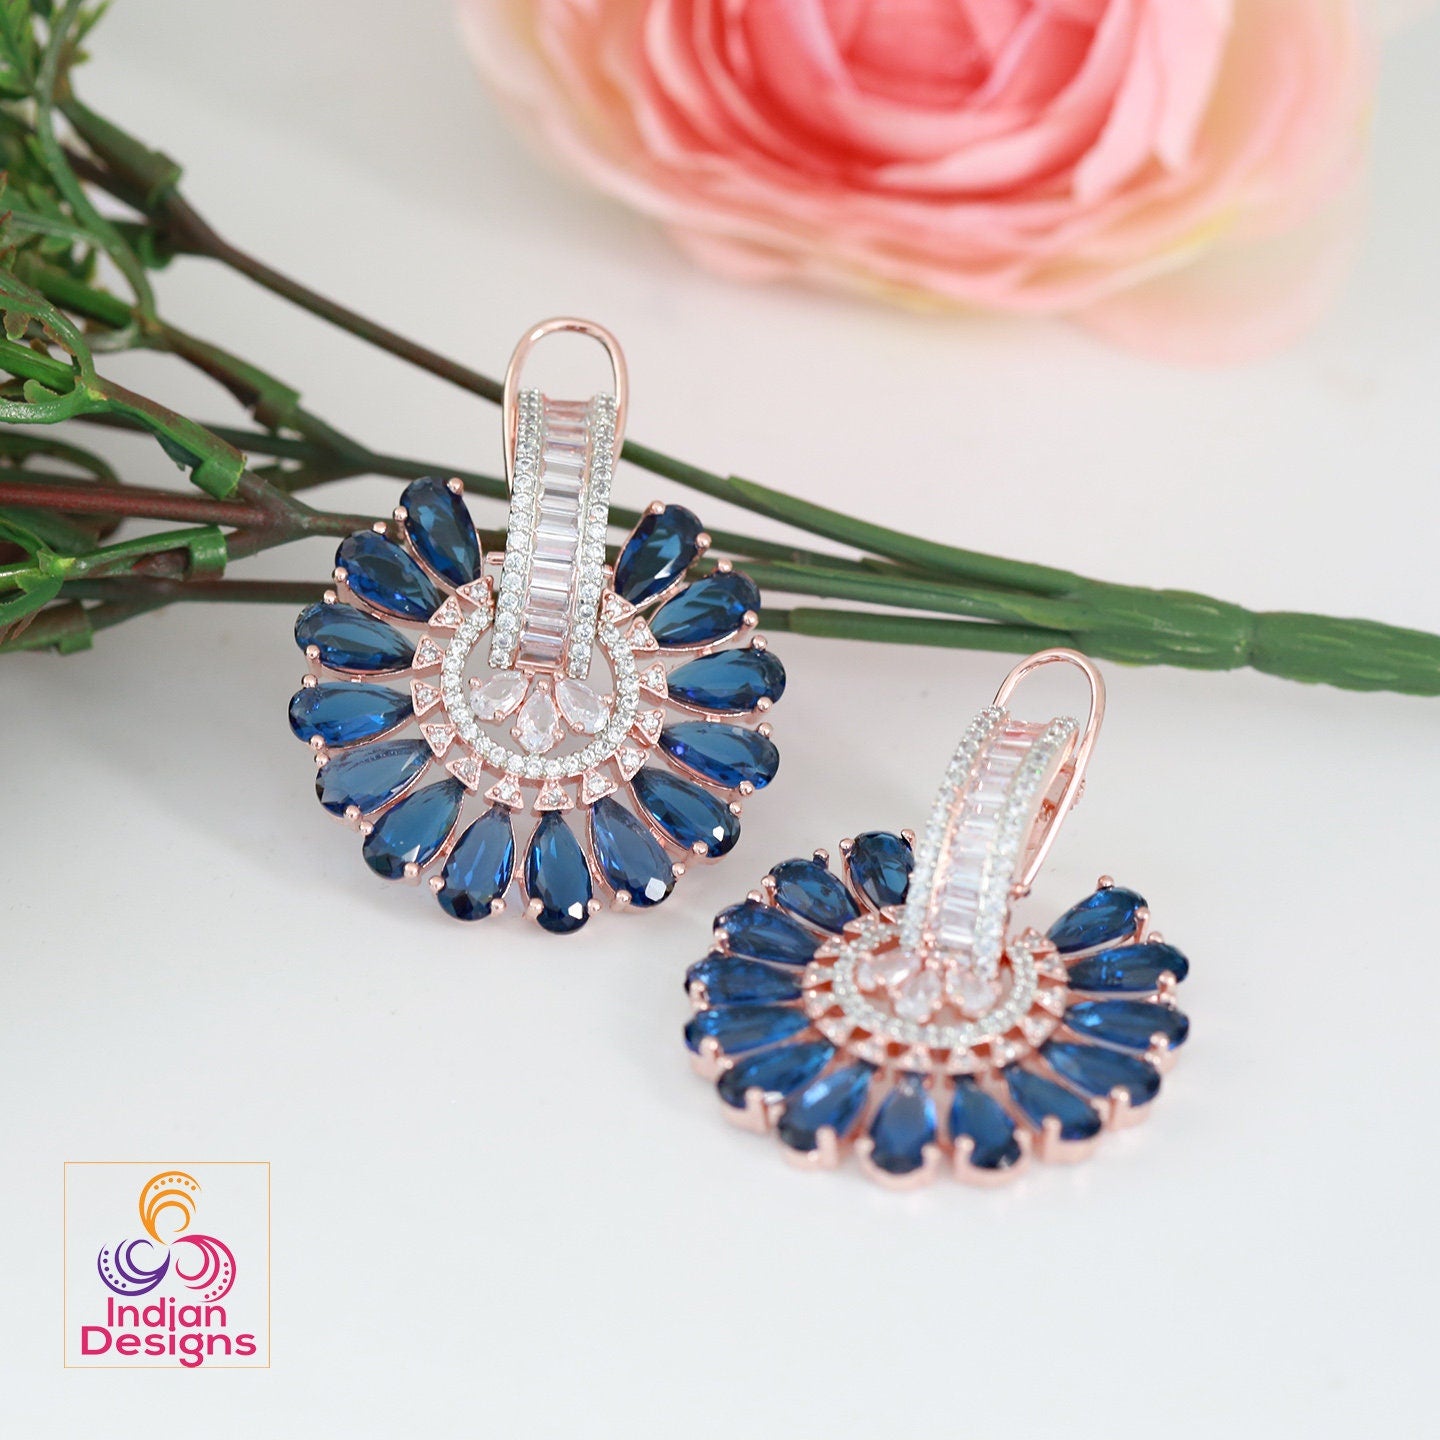 Big flower stud Crystal earrings | Ad stud earrings Pink stones | Rose Gold Plated American Diamond stud Earrings | Bollywood style CZ Studs